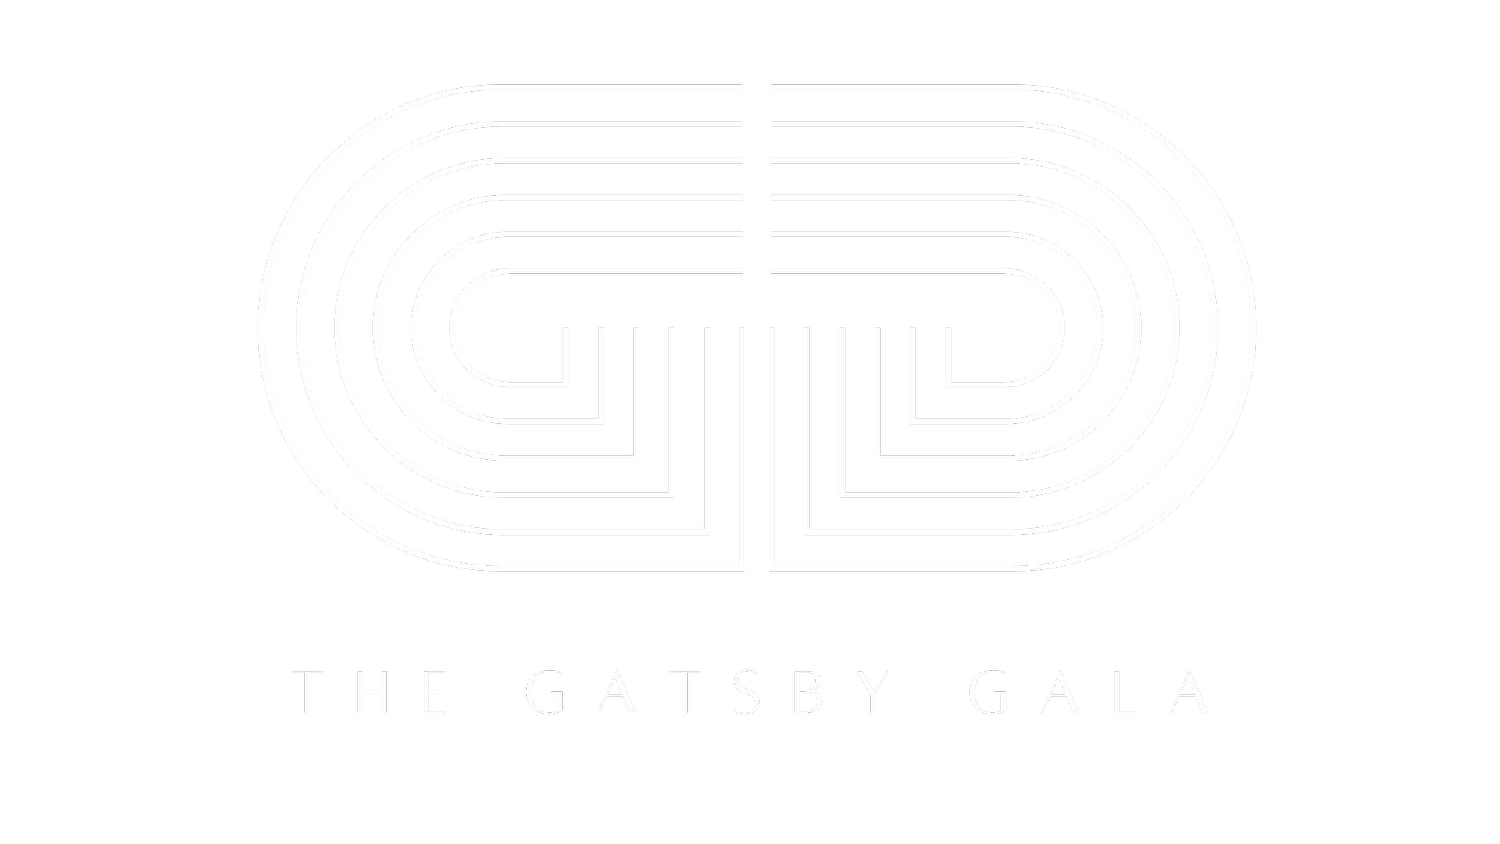 The Gatsby Gala